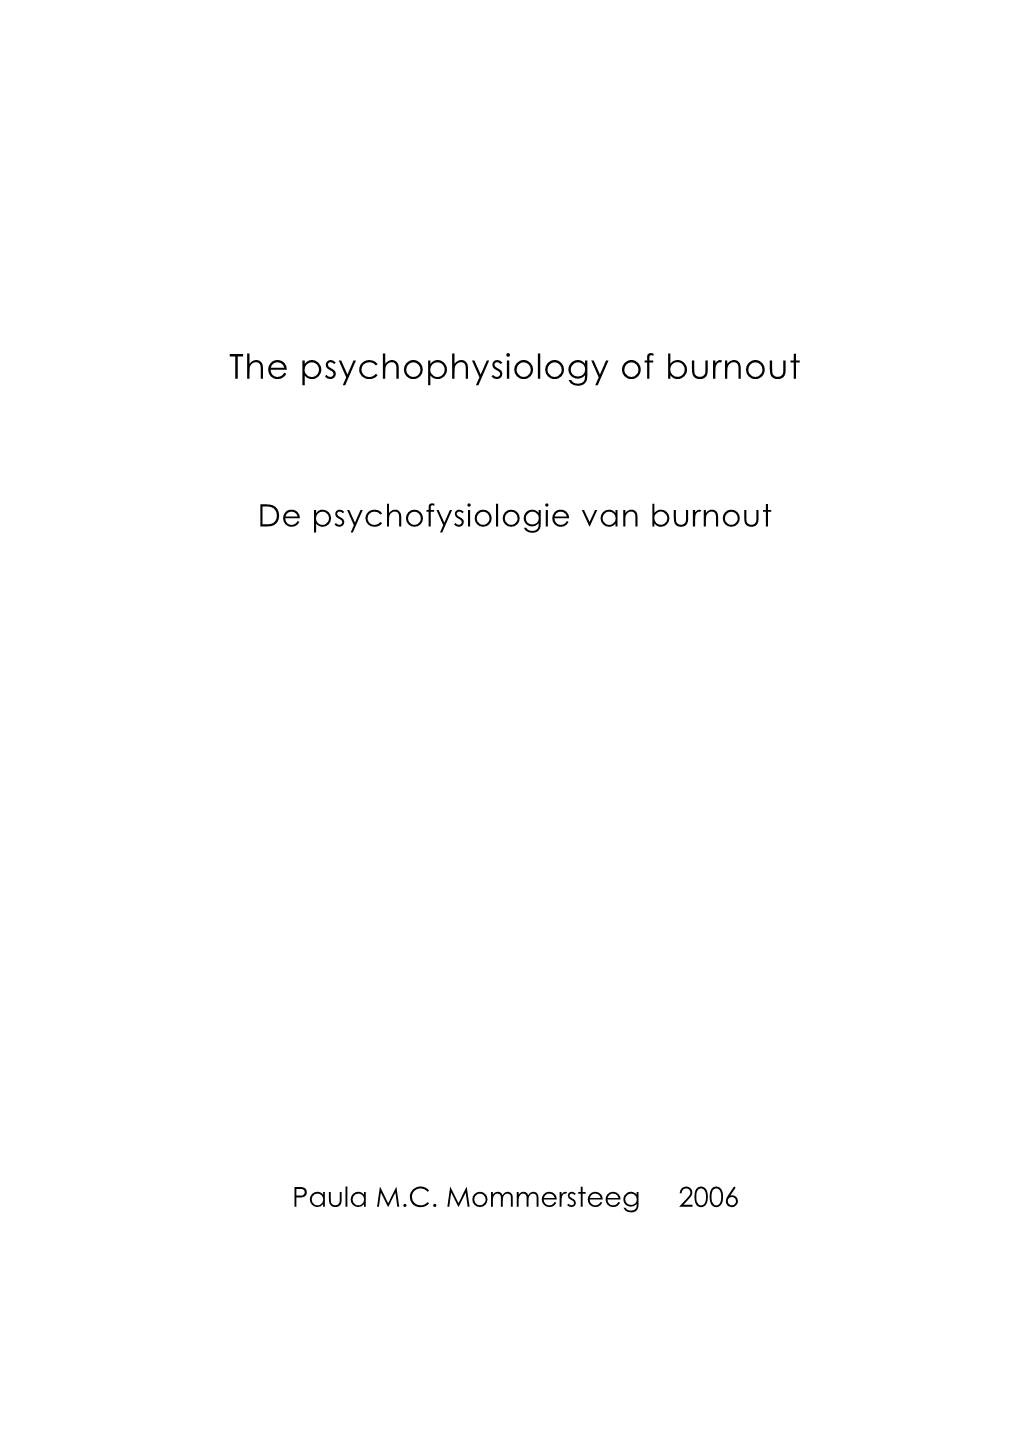 The Psychophysiology of Burnout